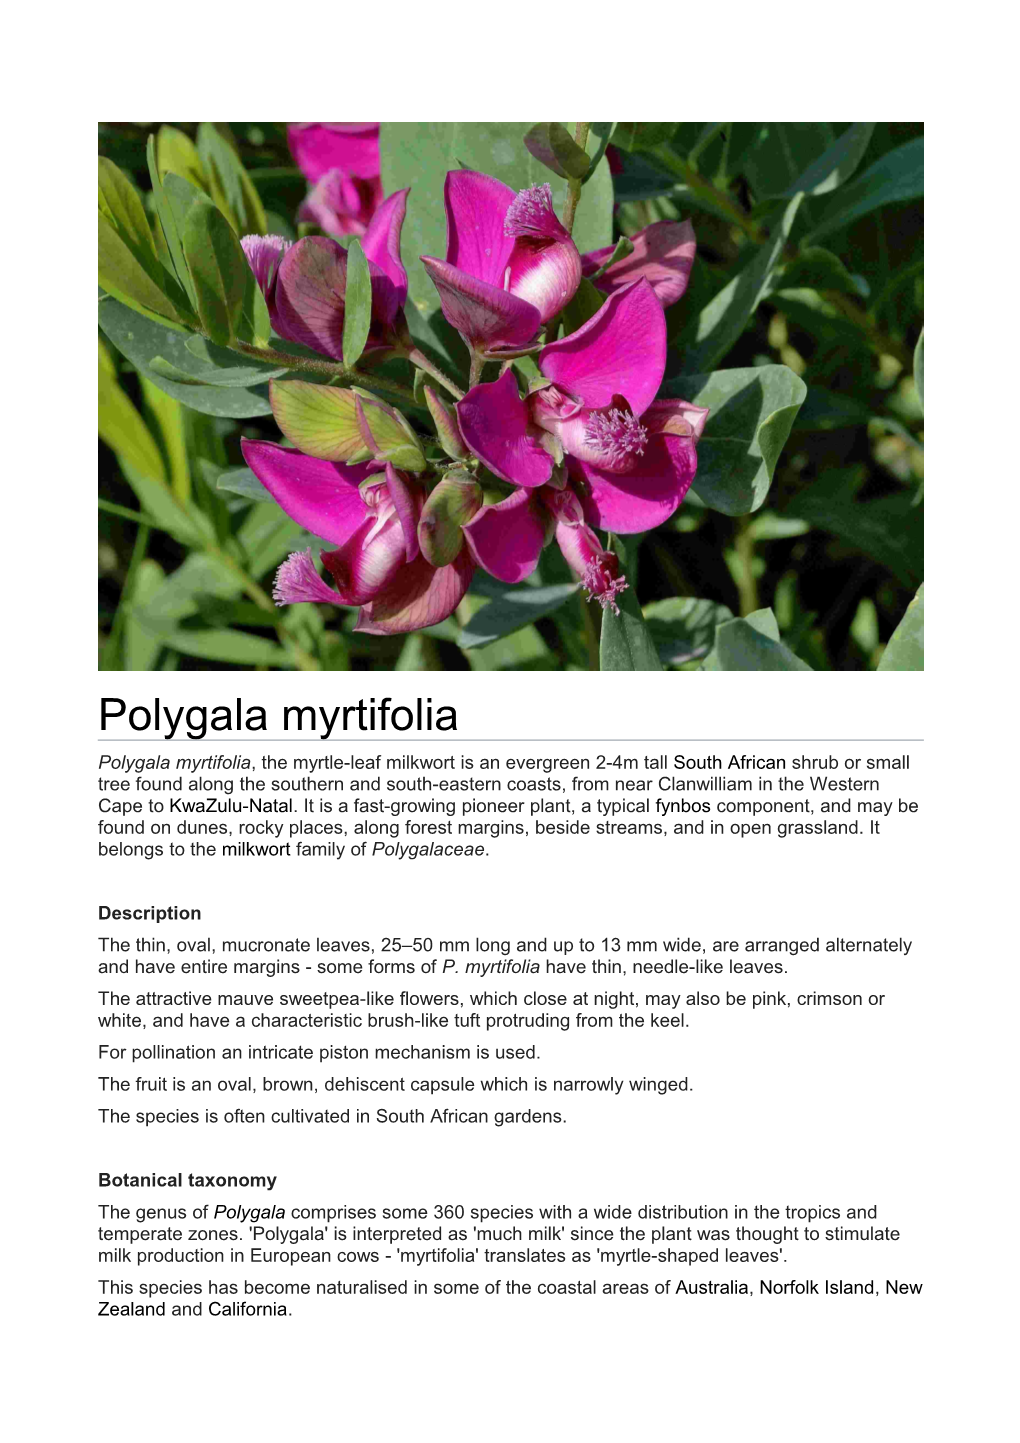 Polygala Myrtifolia